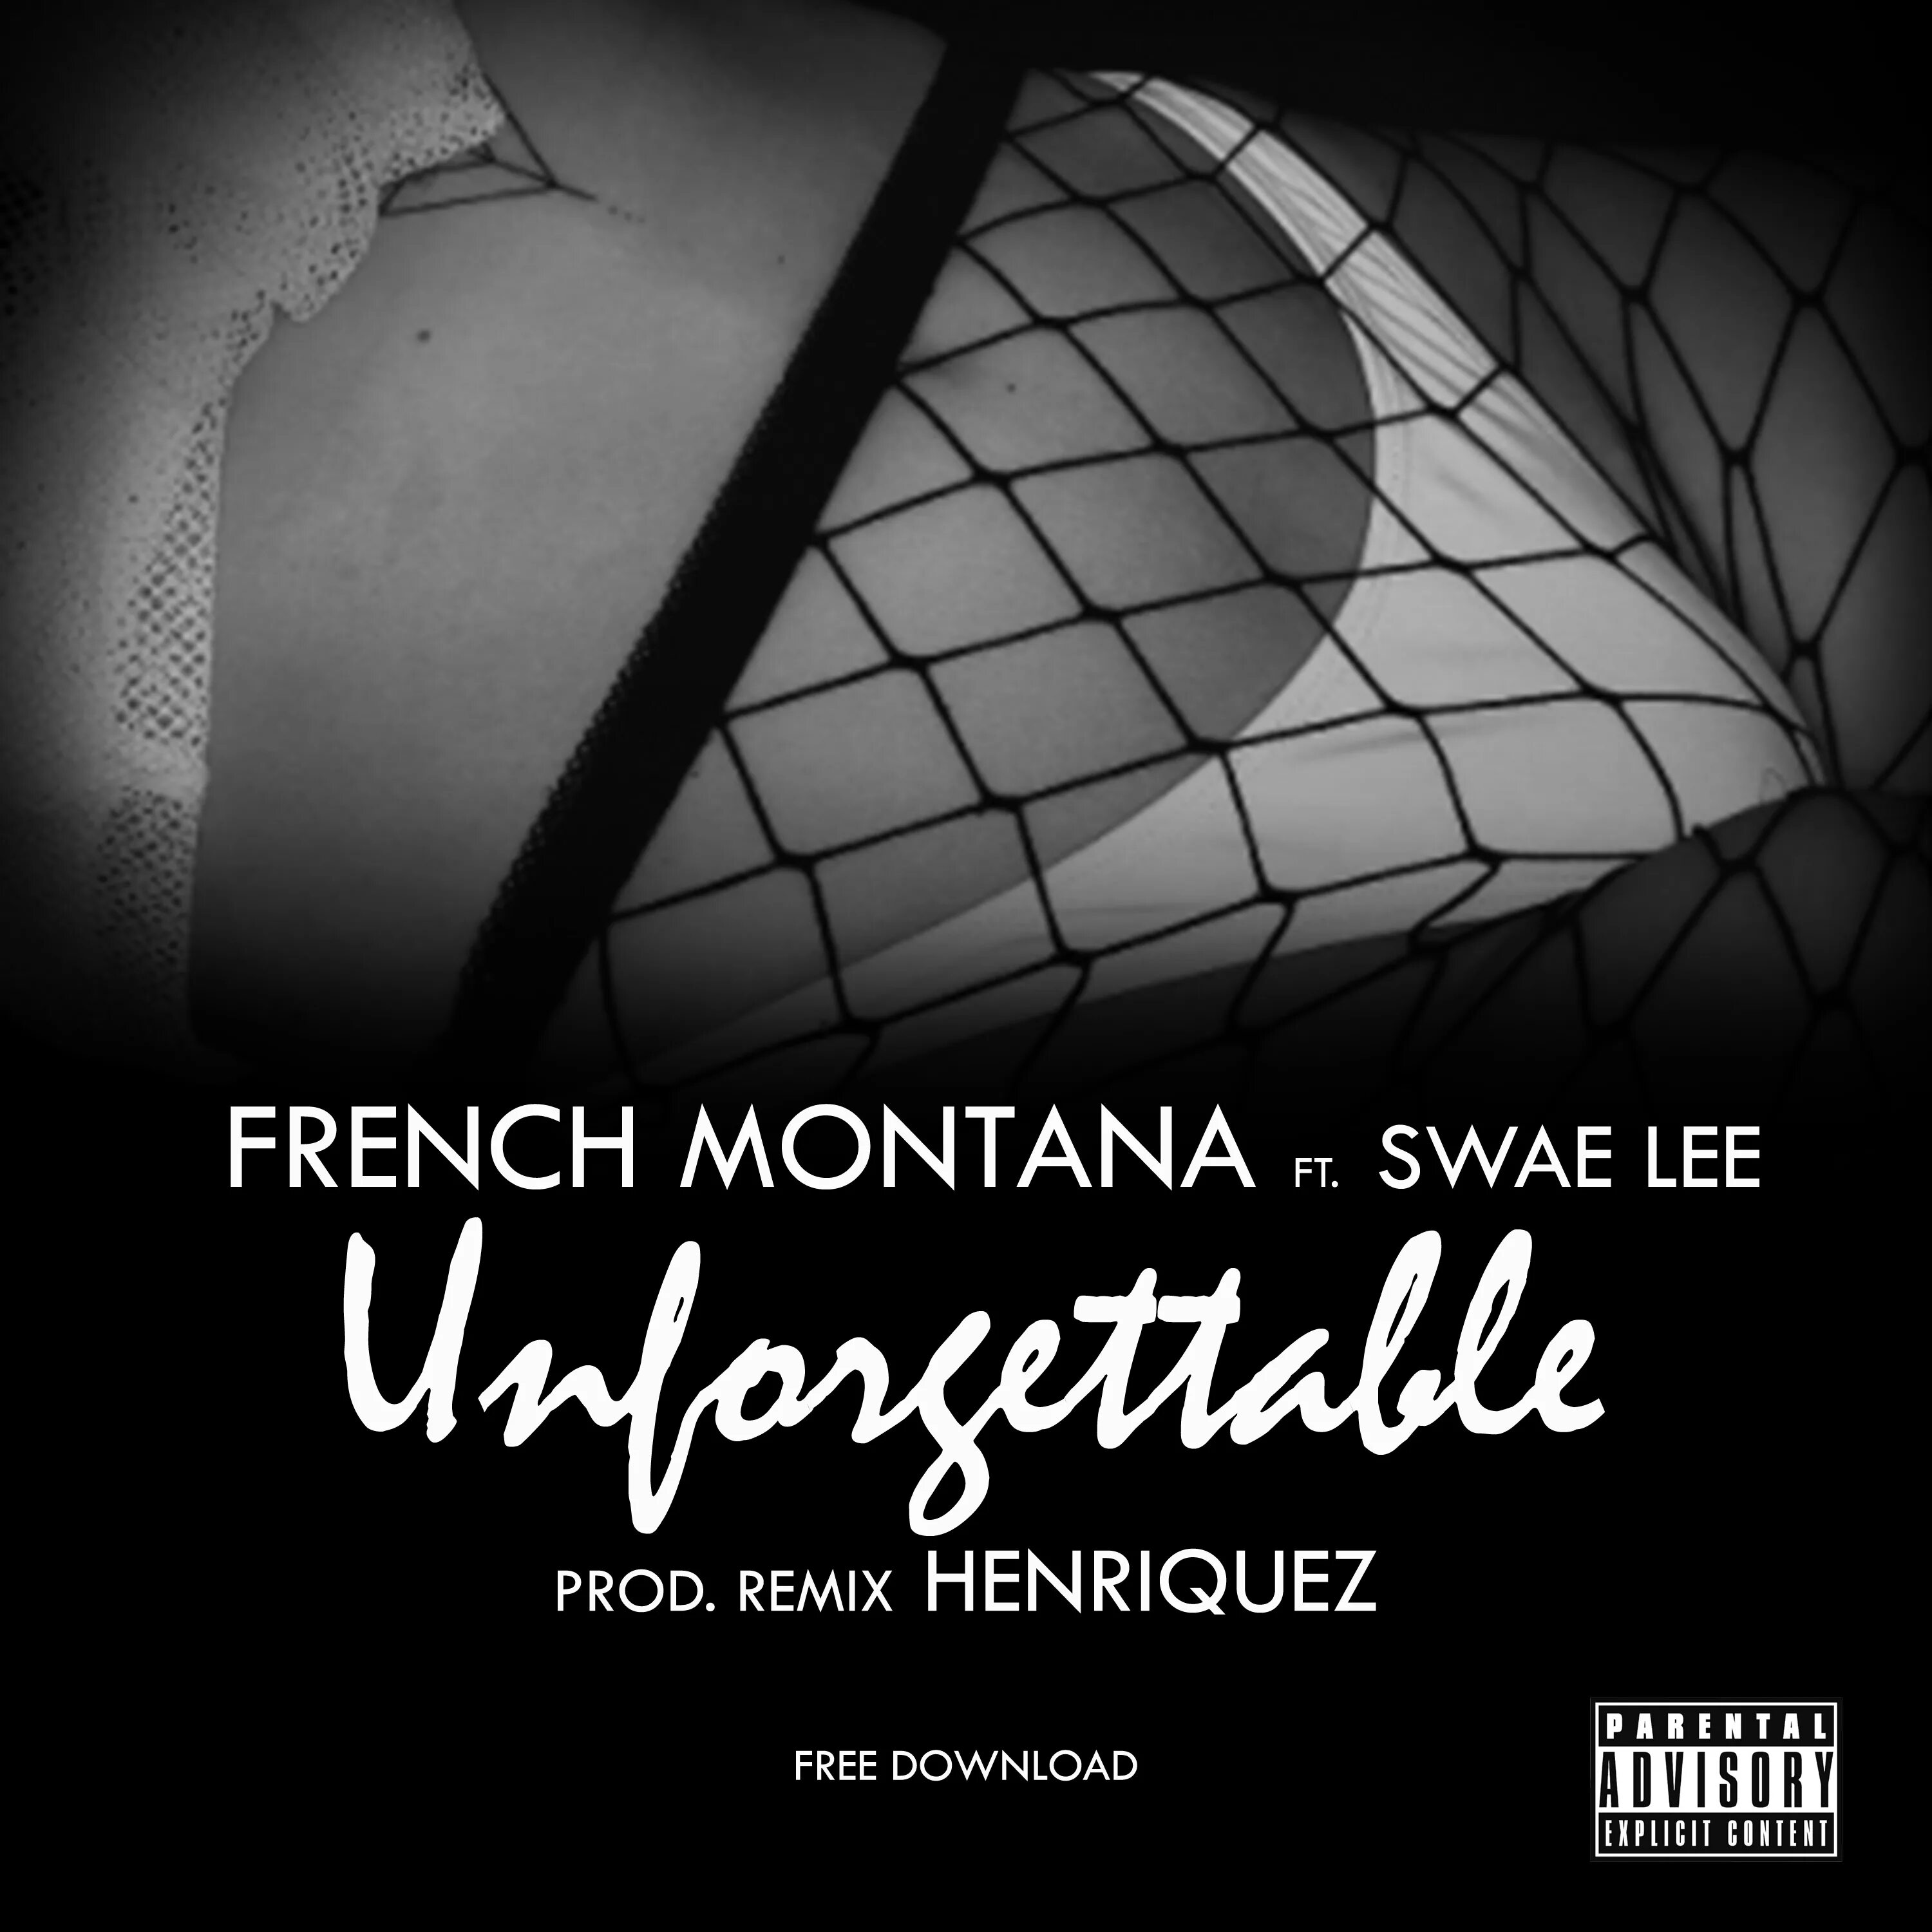 Unforgettable french. Unforgettable French Montana обложка. Swae Lee Unforgettable. French Montana feat. Swae Lee - Unforgettable. French Montana Swae Lee.